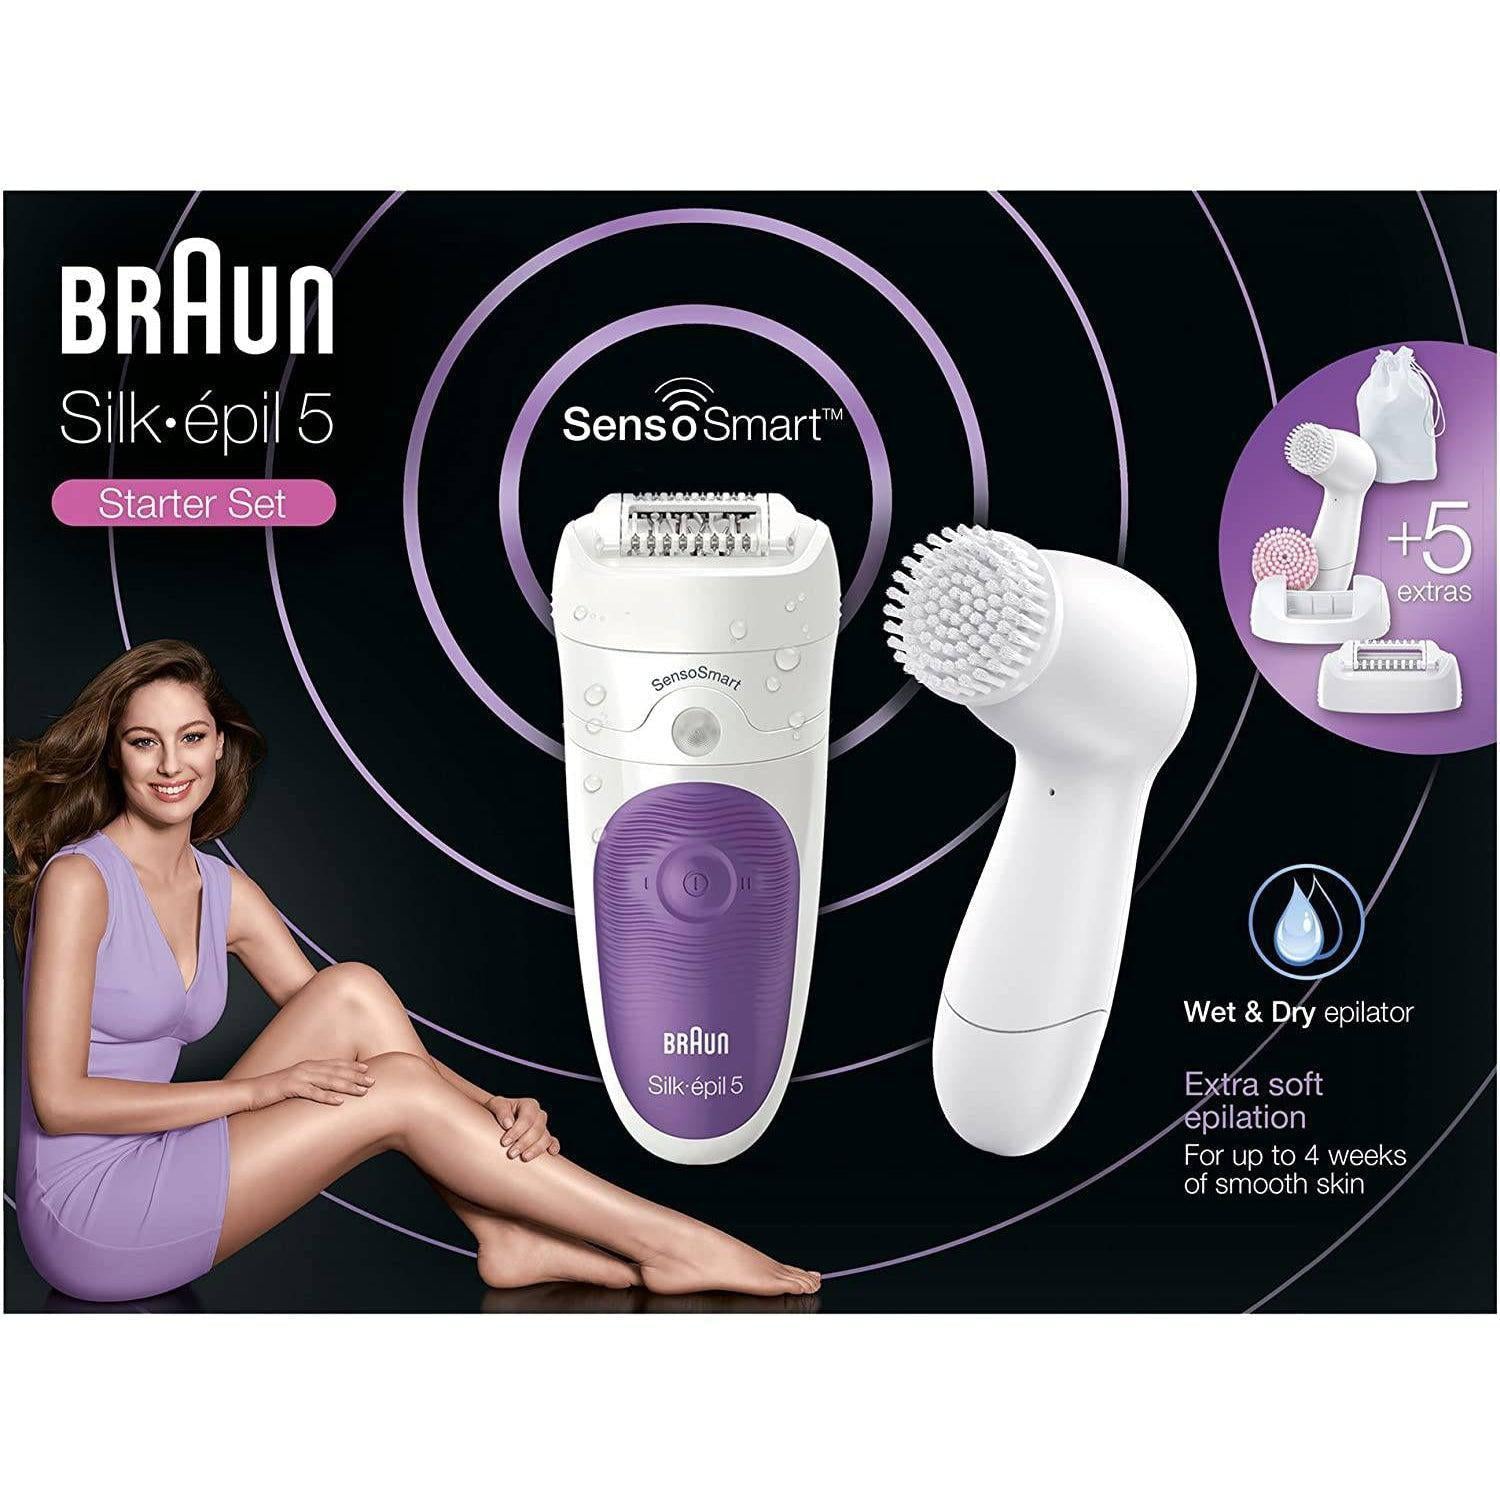 Braun Silk-épil Beauty Set 9 9/985 BS Wet & Dry epilator with 8 extras